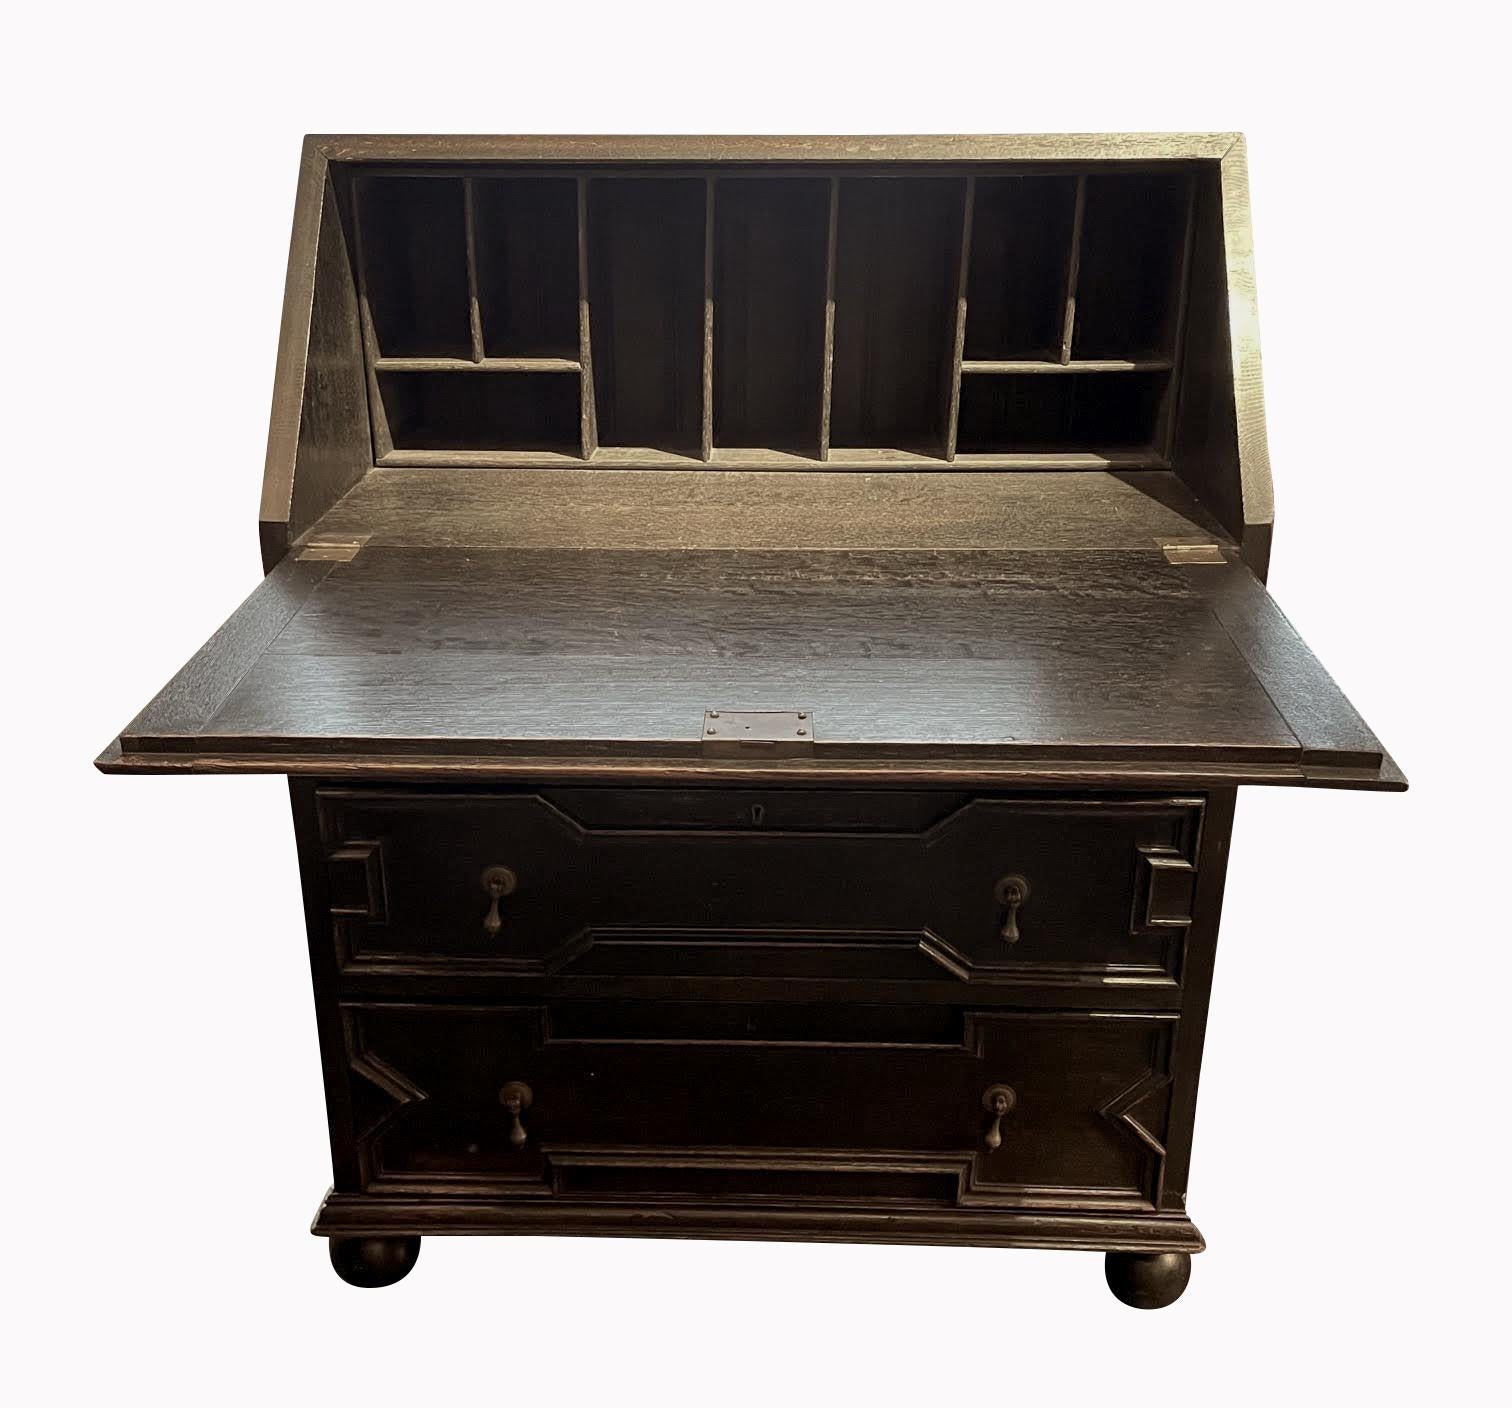 19th century English fold down desk / commode.
Ebonized oak finish.
Three drawers with brass pulls.
Multi cubbies for storage.
Decorative raised wood strip design.
Fold down desk is 29